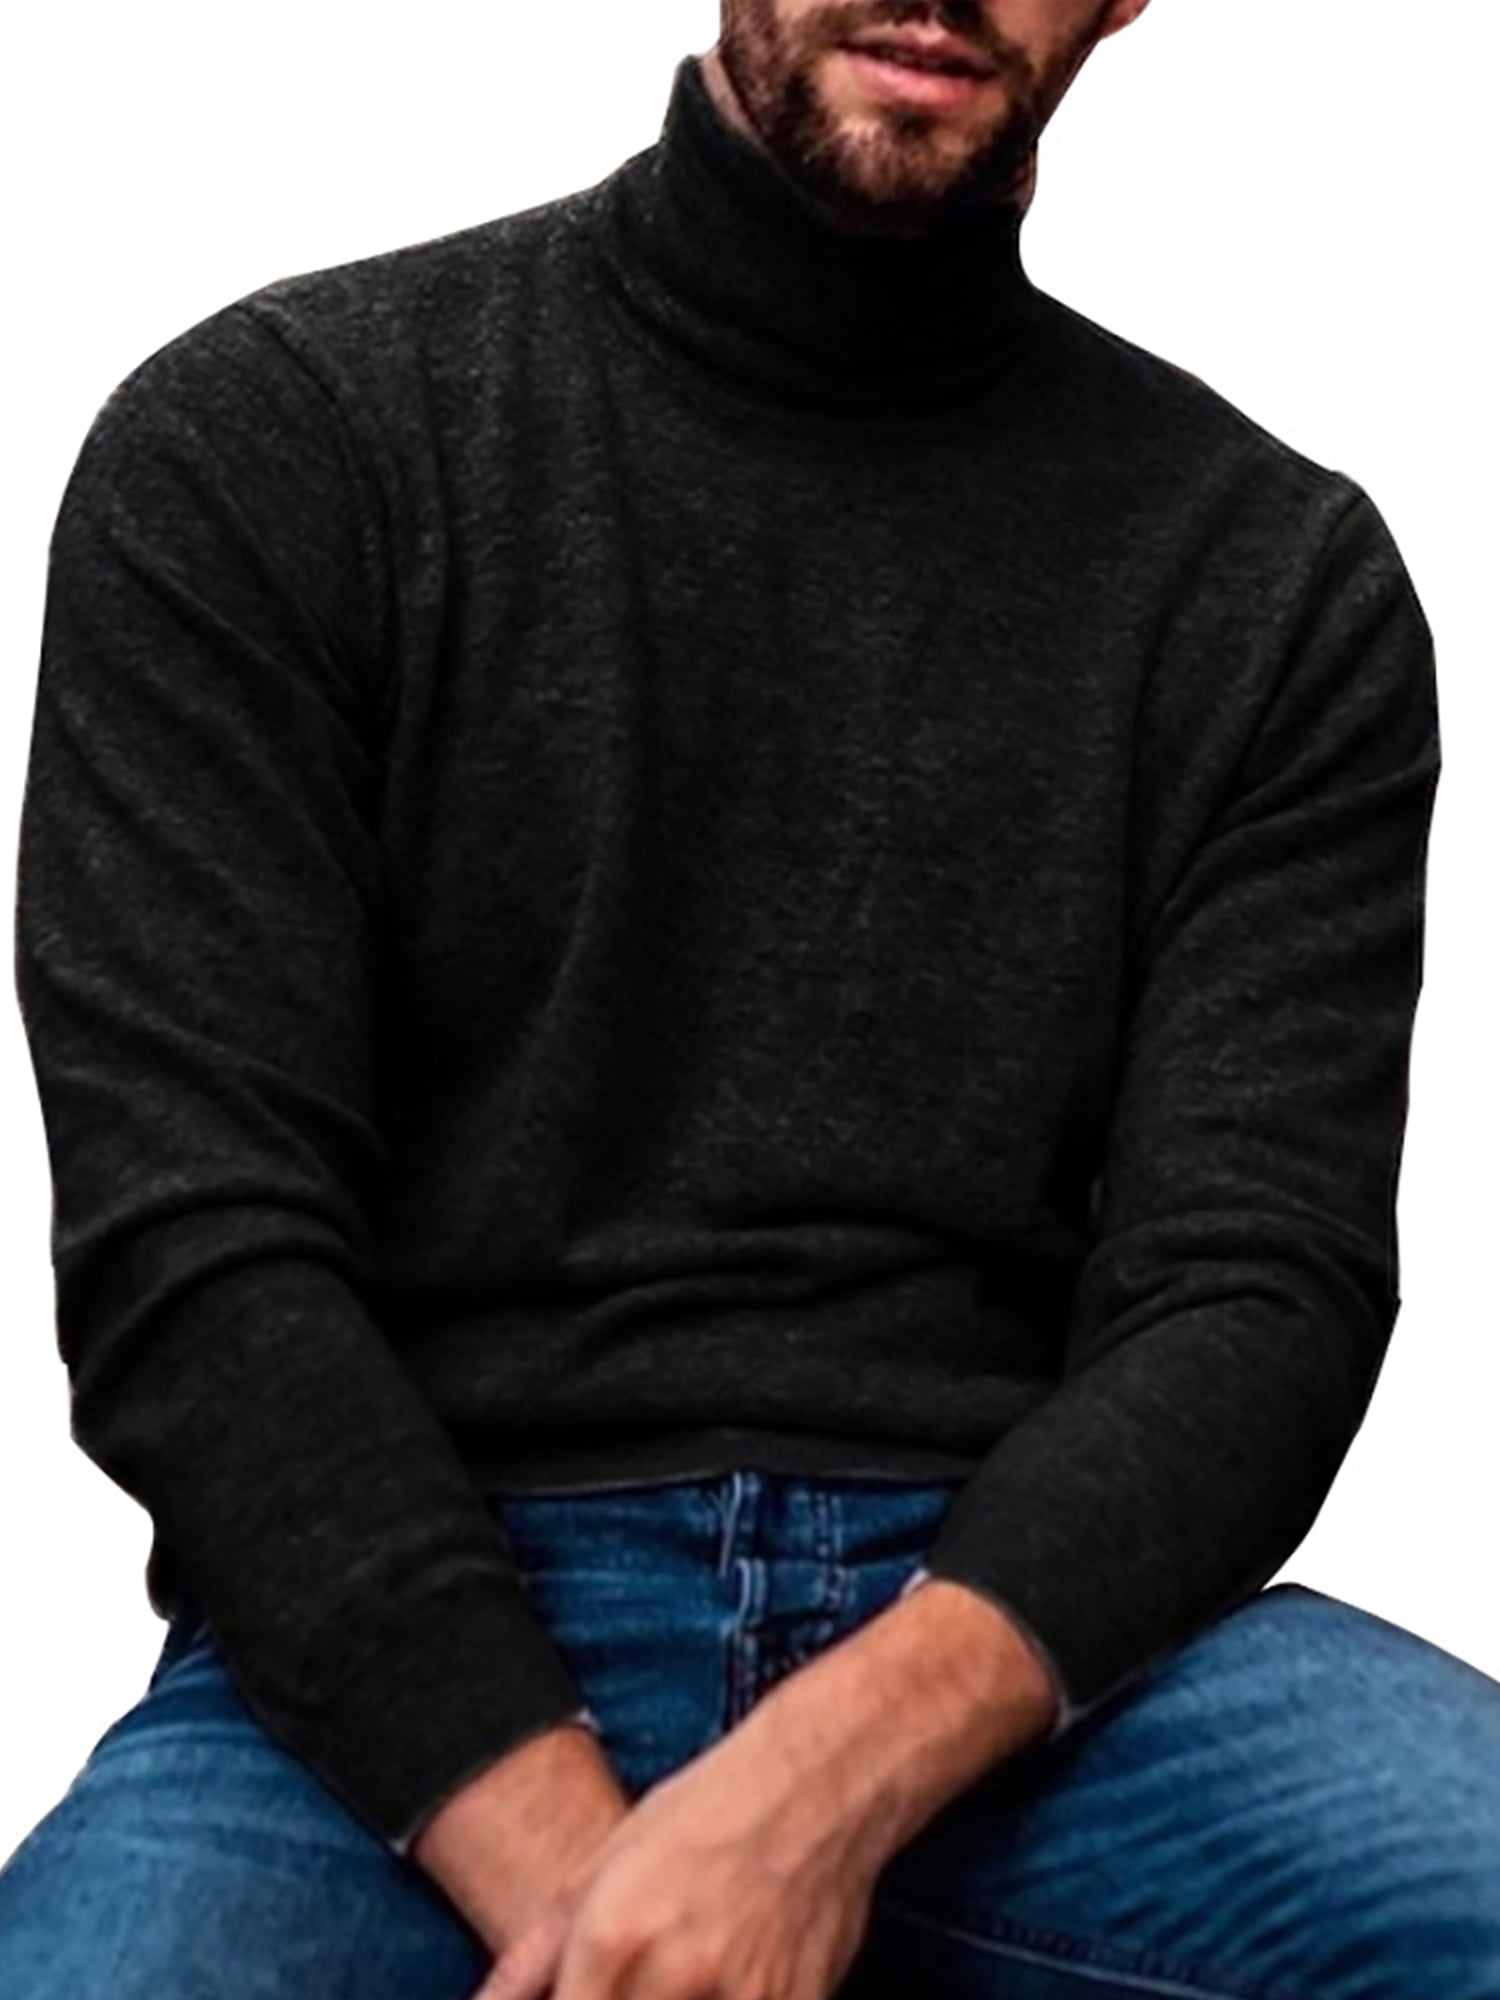 Men's Winter Warm Knitted Turtleneck Pullover Casual Slim Sweater Jumper Tops UK 